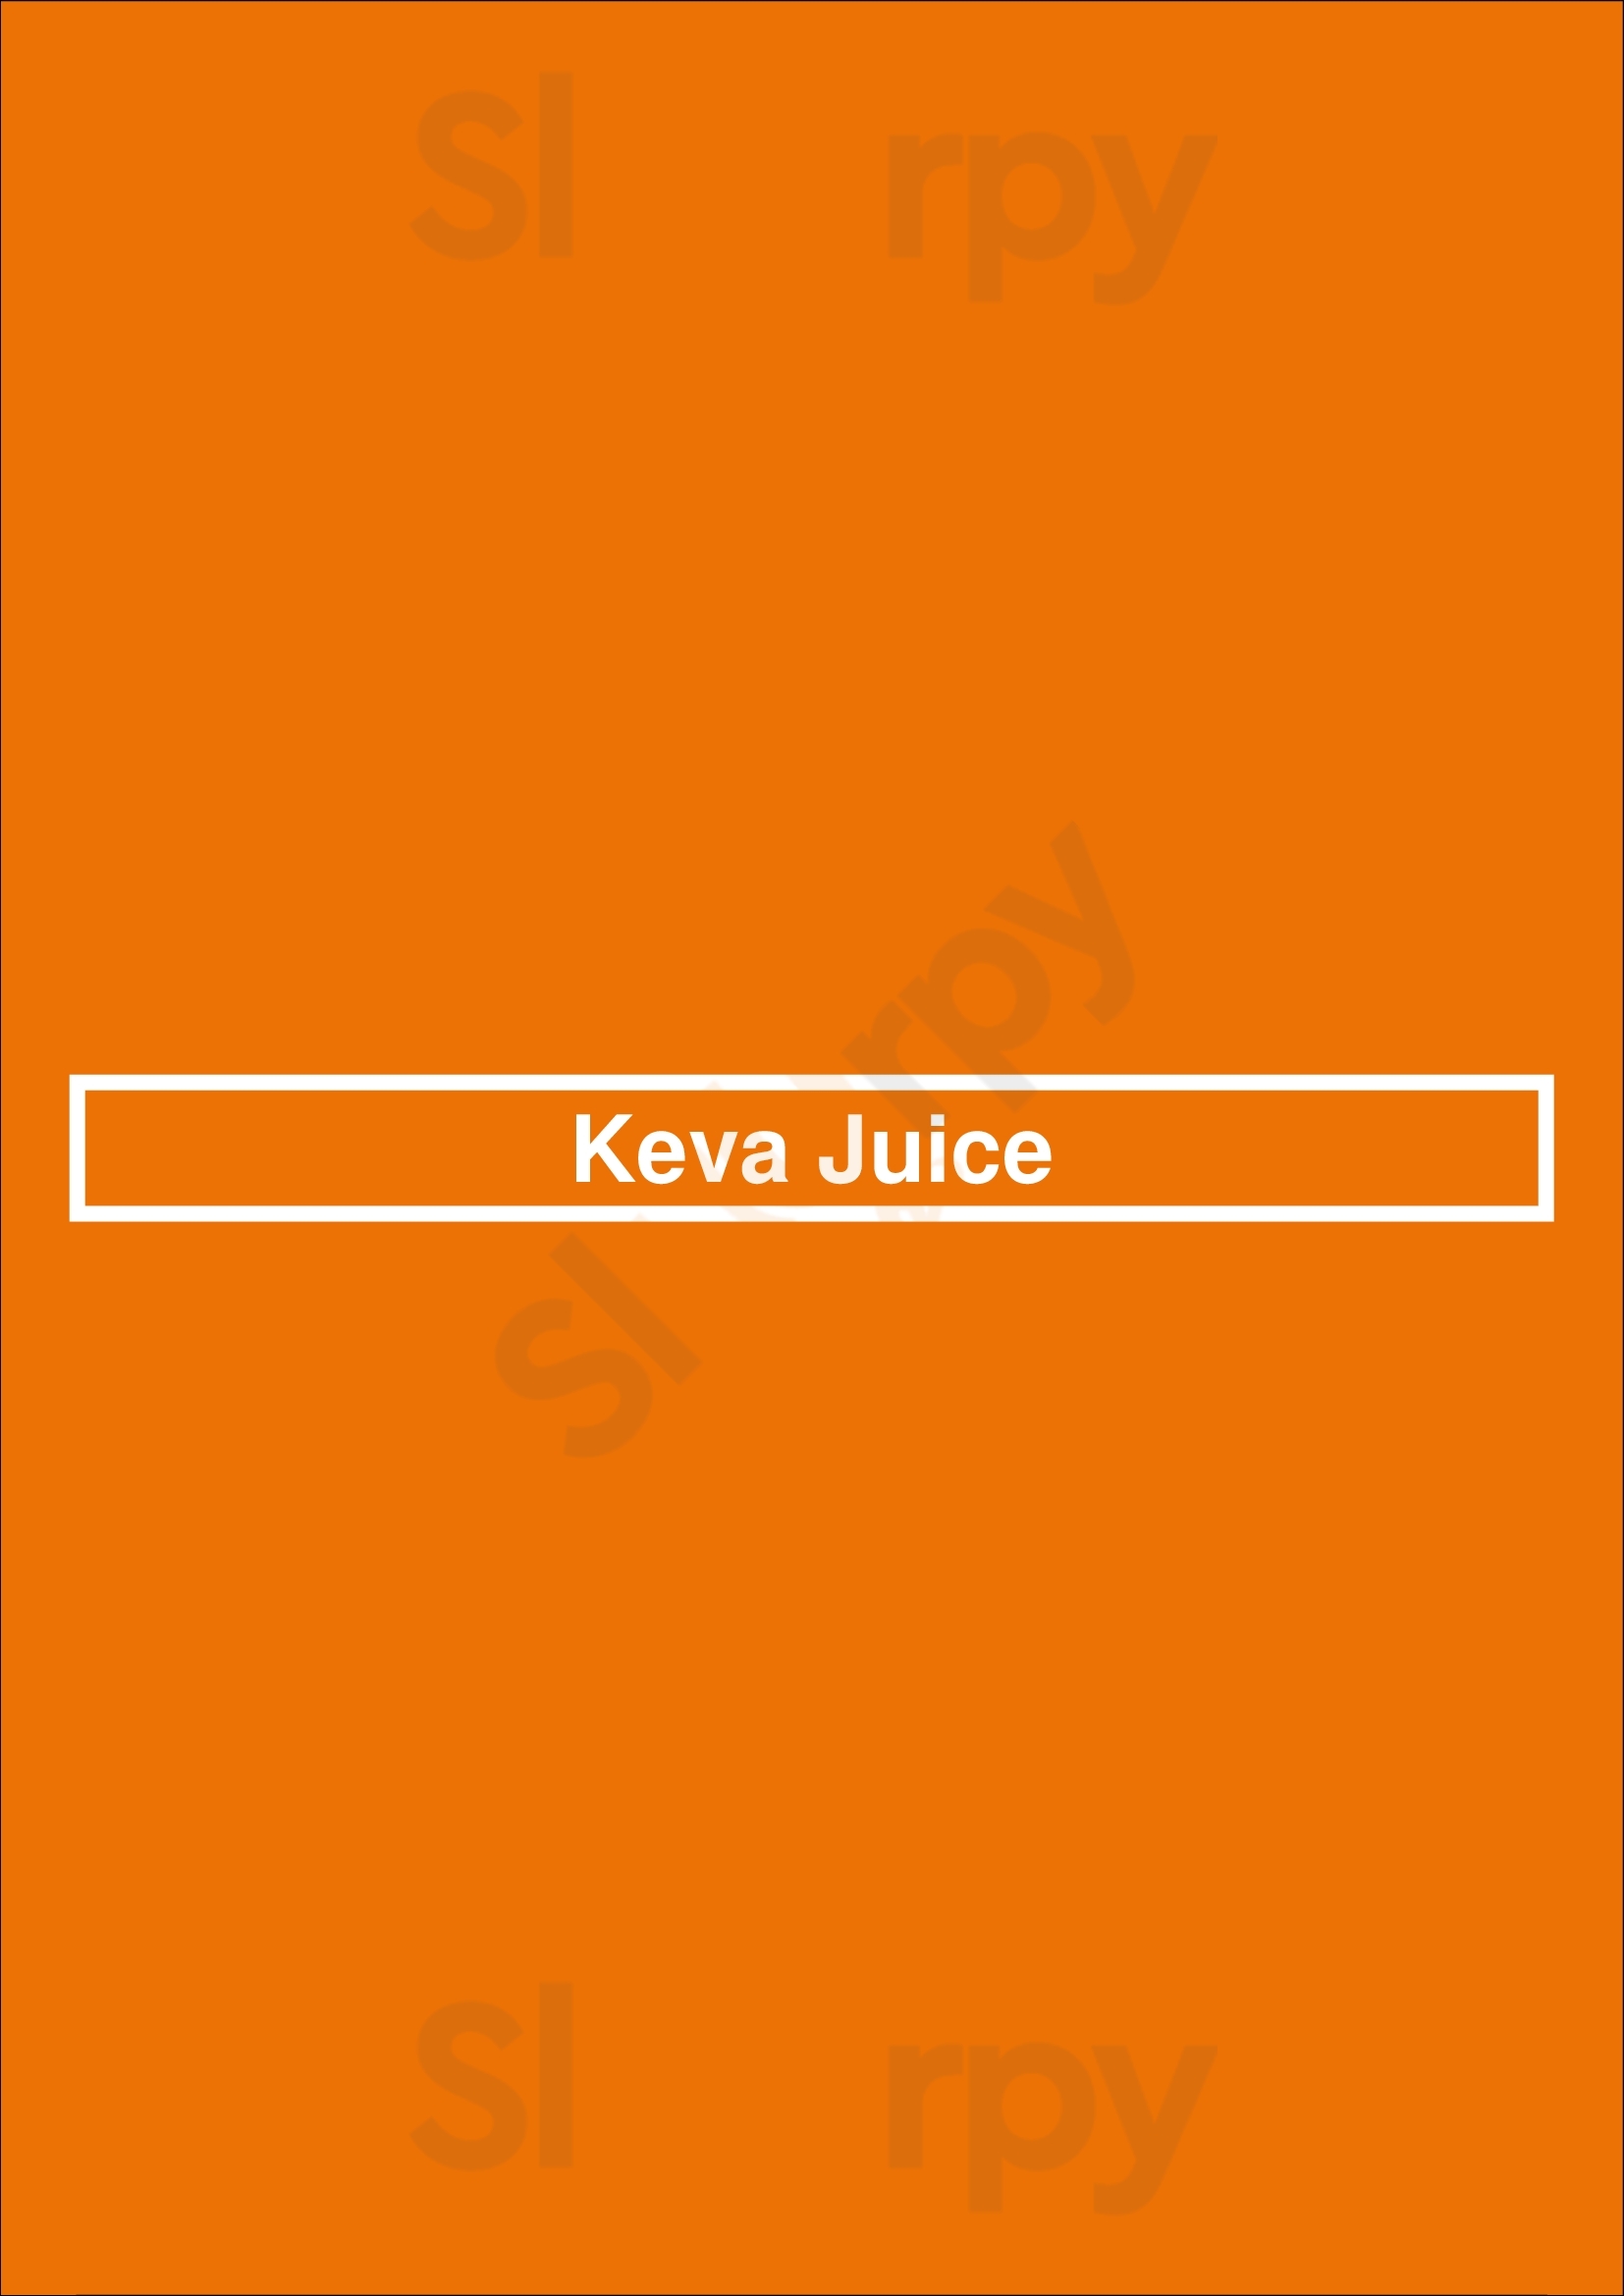 Keva Juice Sparks Menu - 1